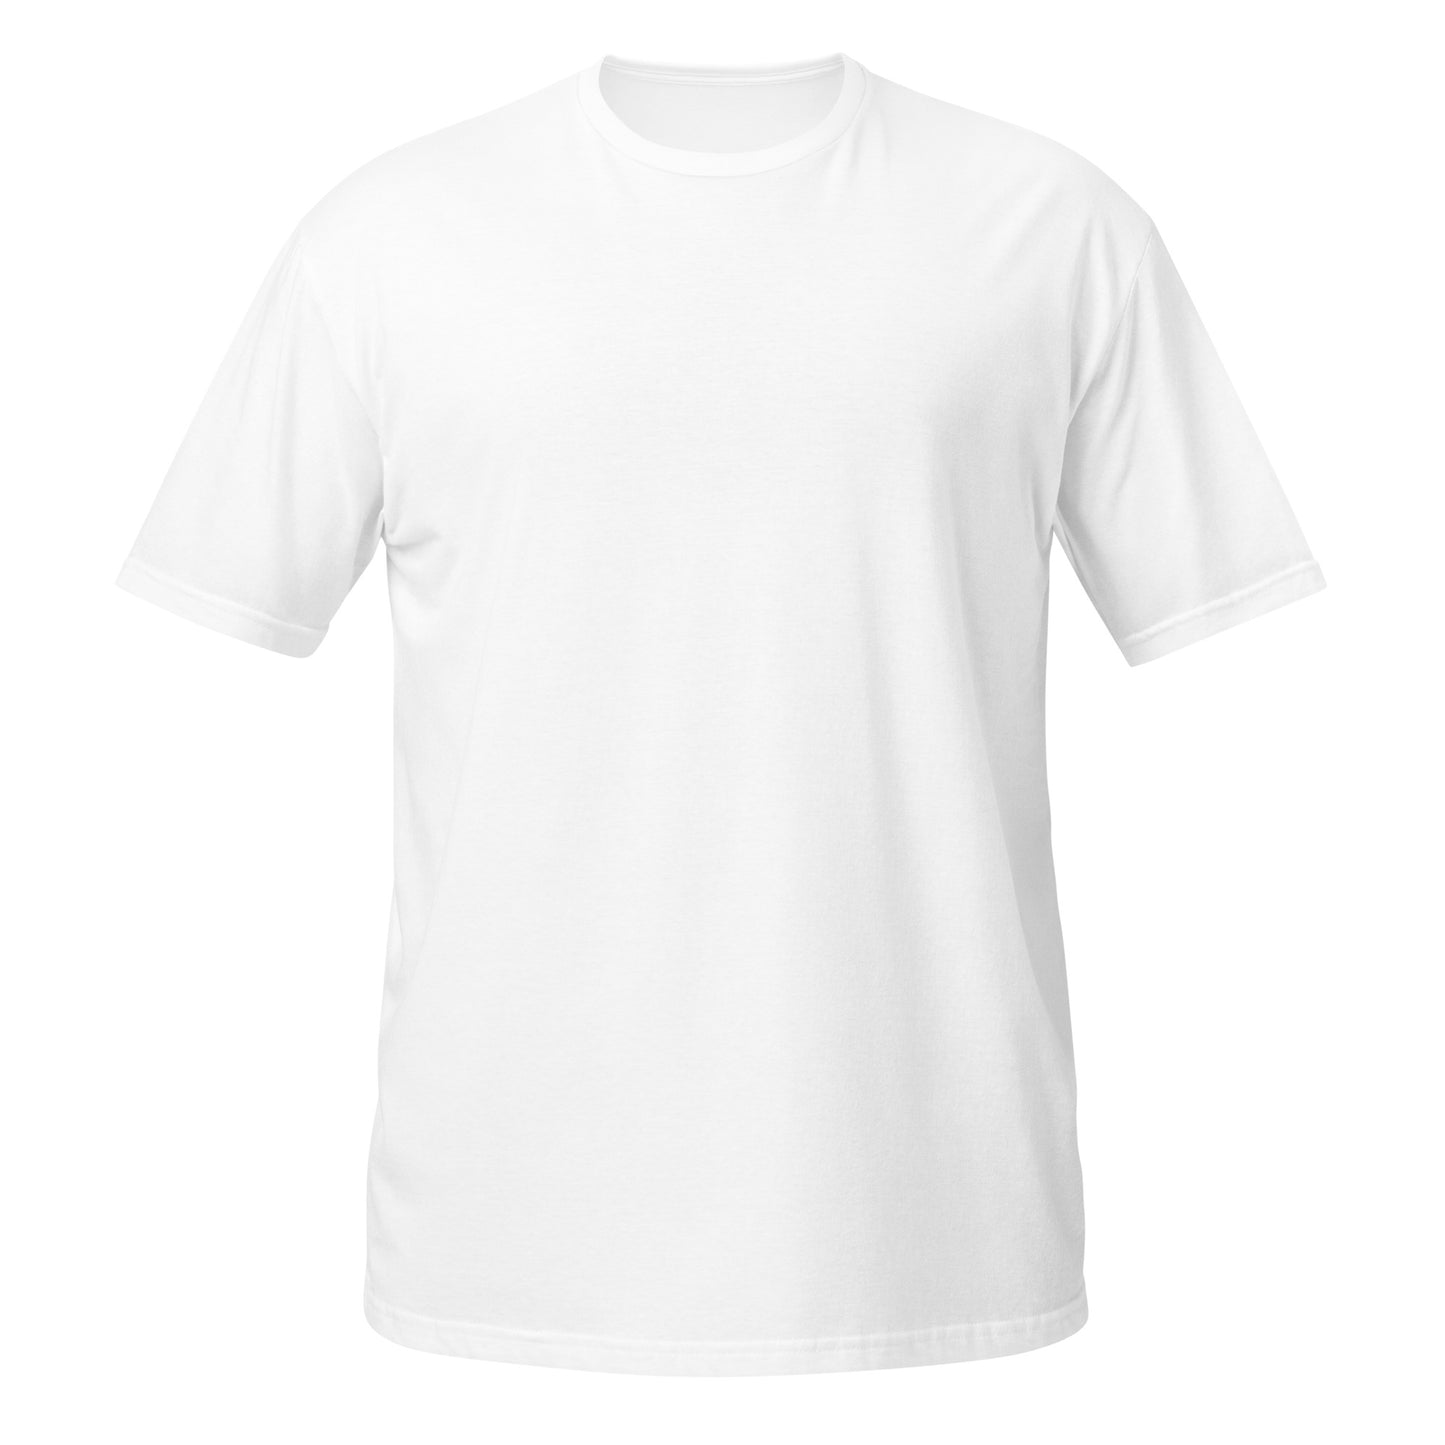 "Avanti" unisex t-shirt